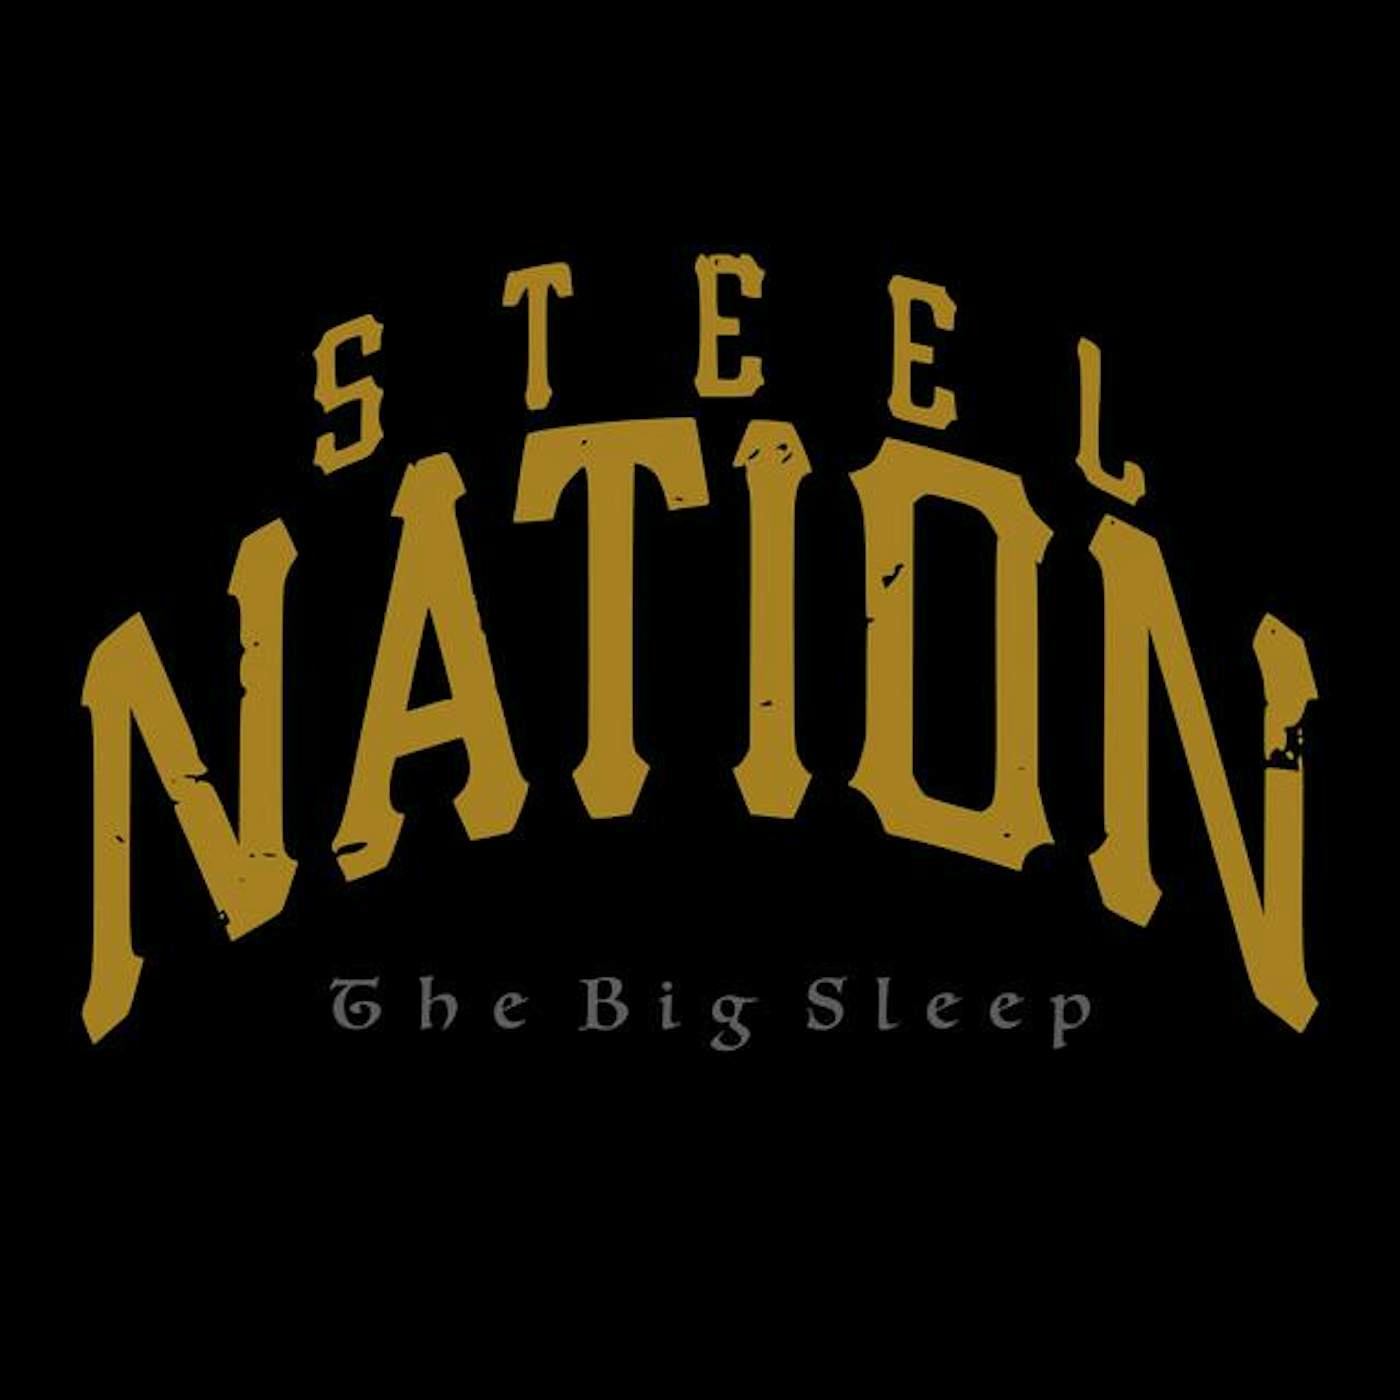 Steel Nation